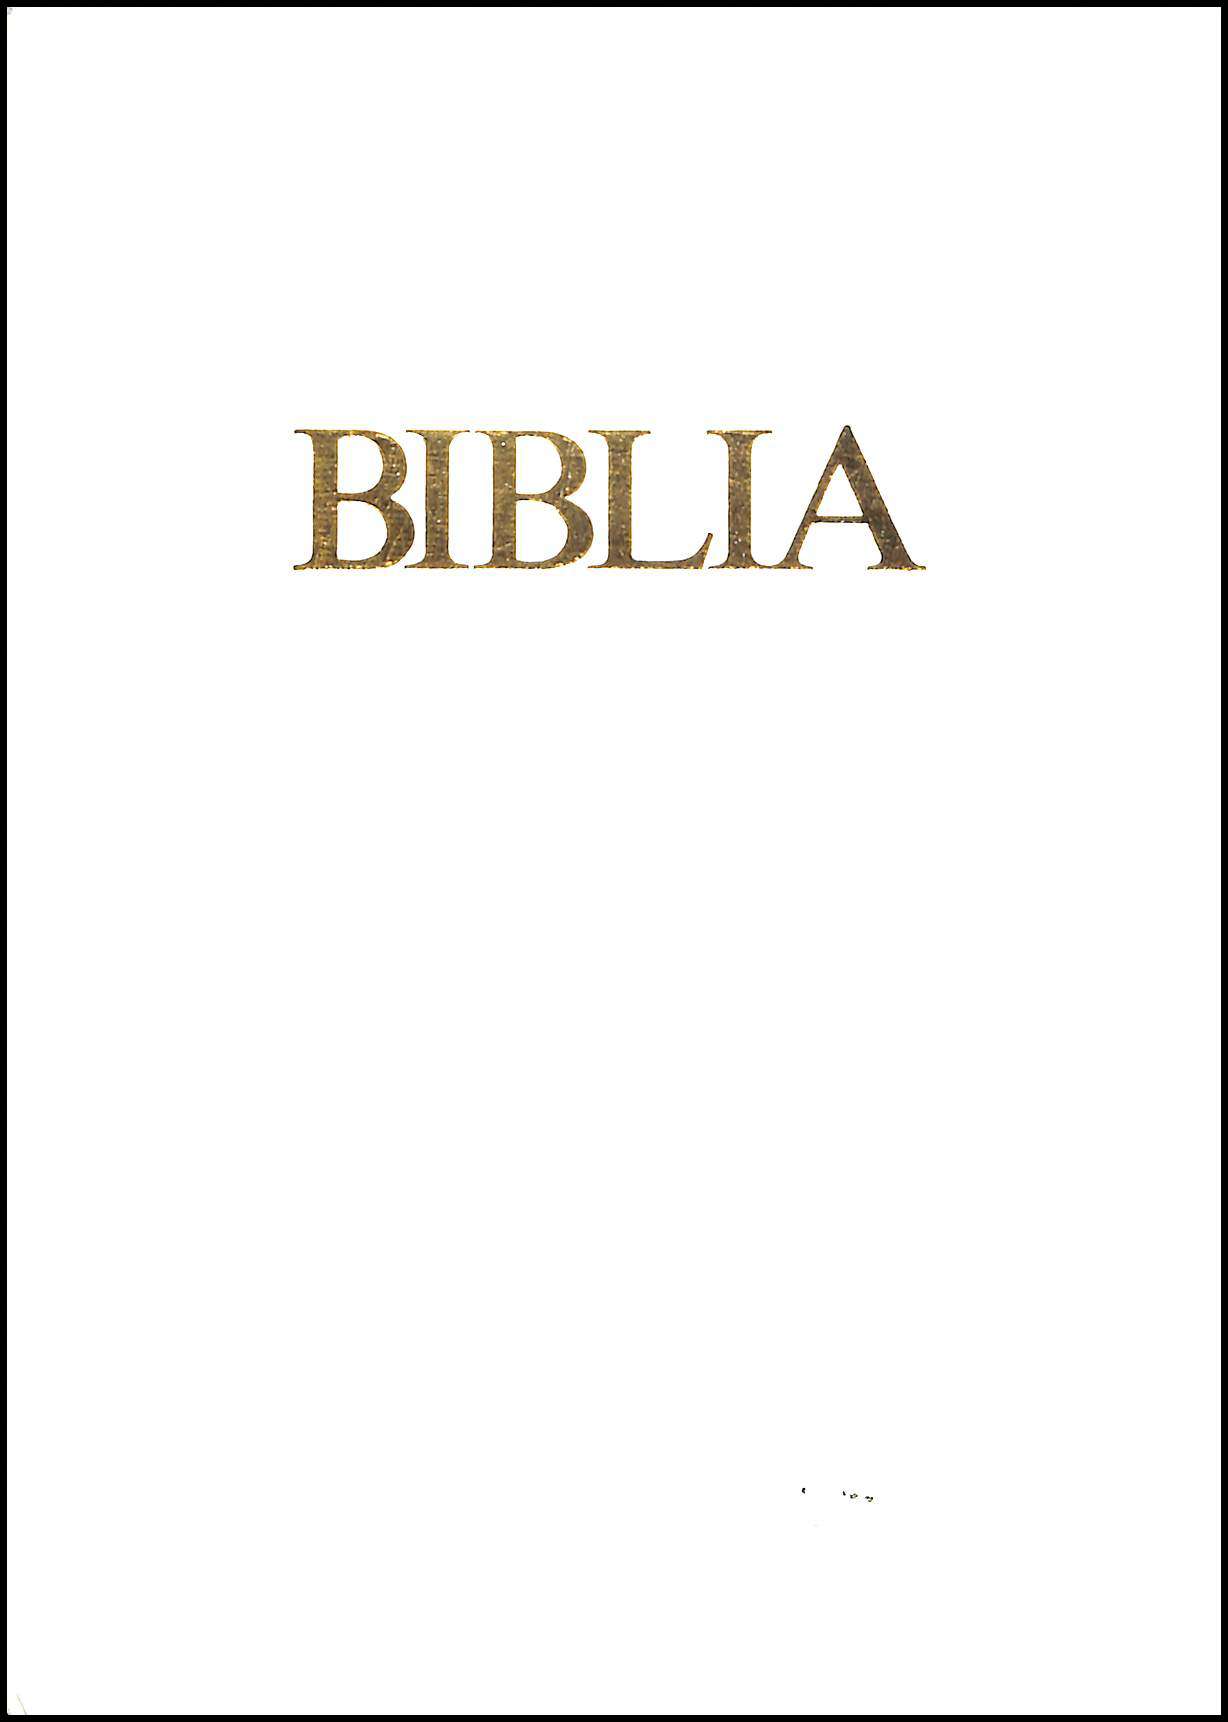 Biblia - szvetsgi s jszvetsgi szentrs